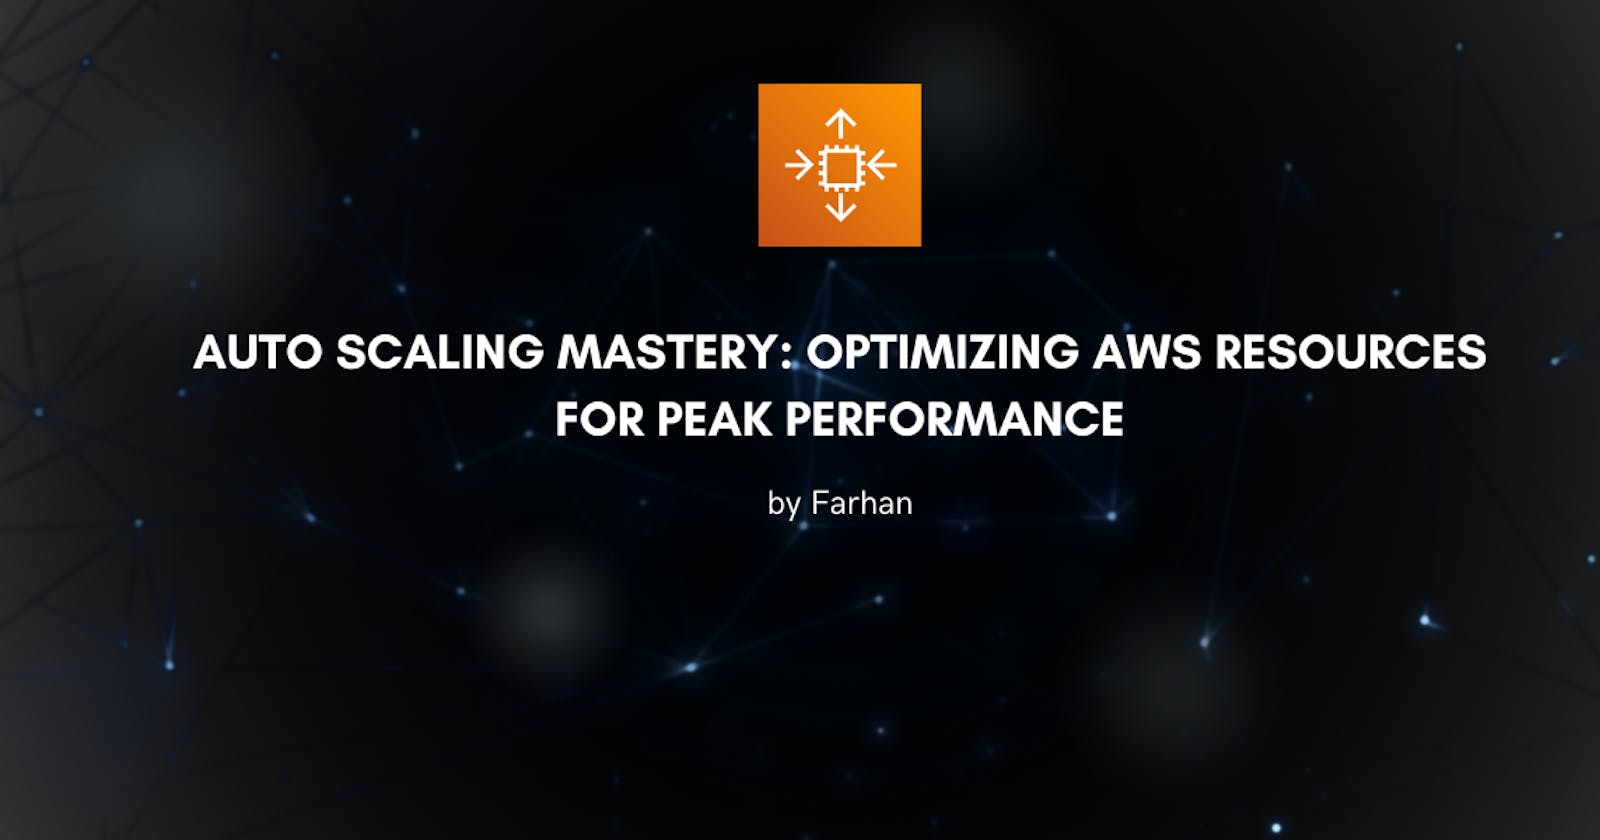 Auto Scaling Mastery: Optimizing AWS Resources for Peak Performance